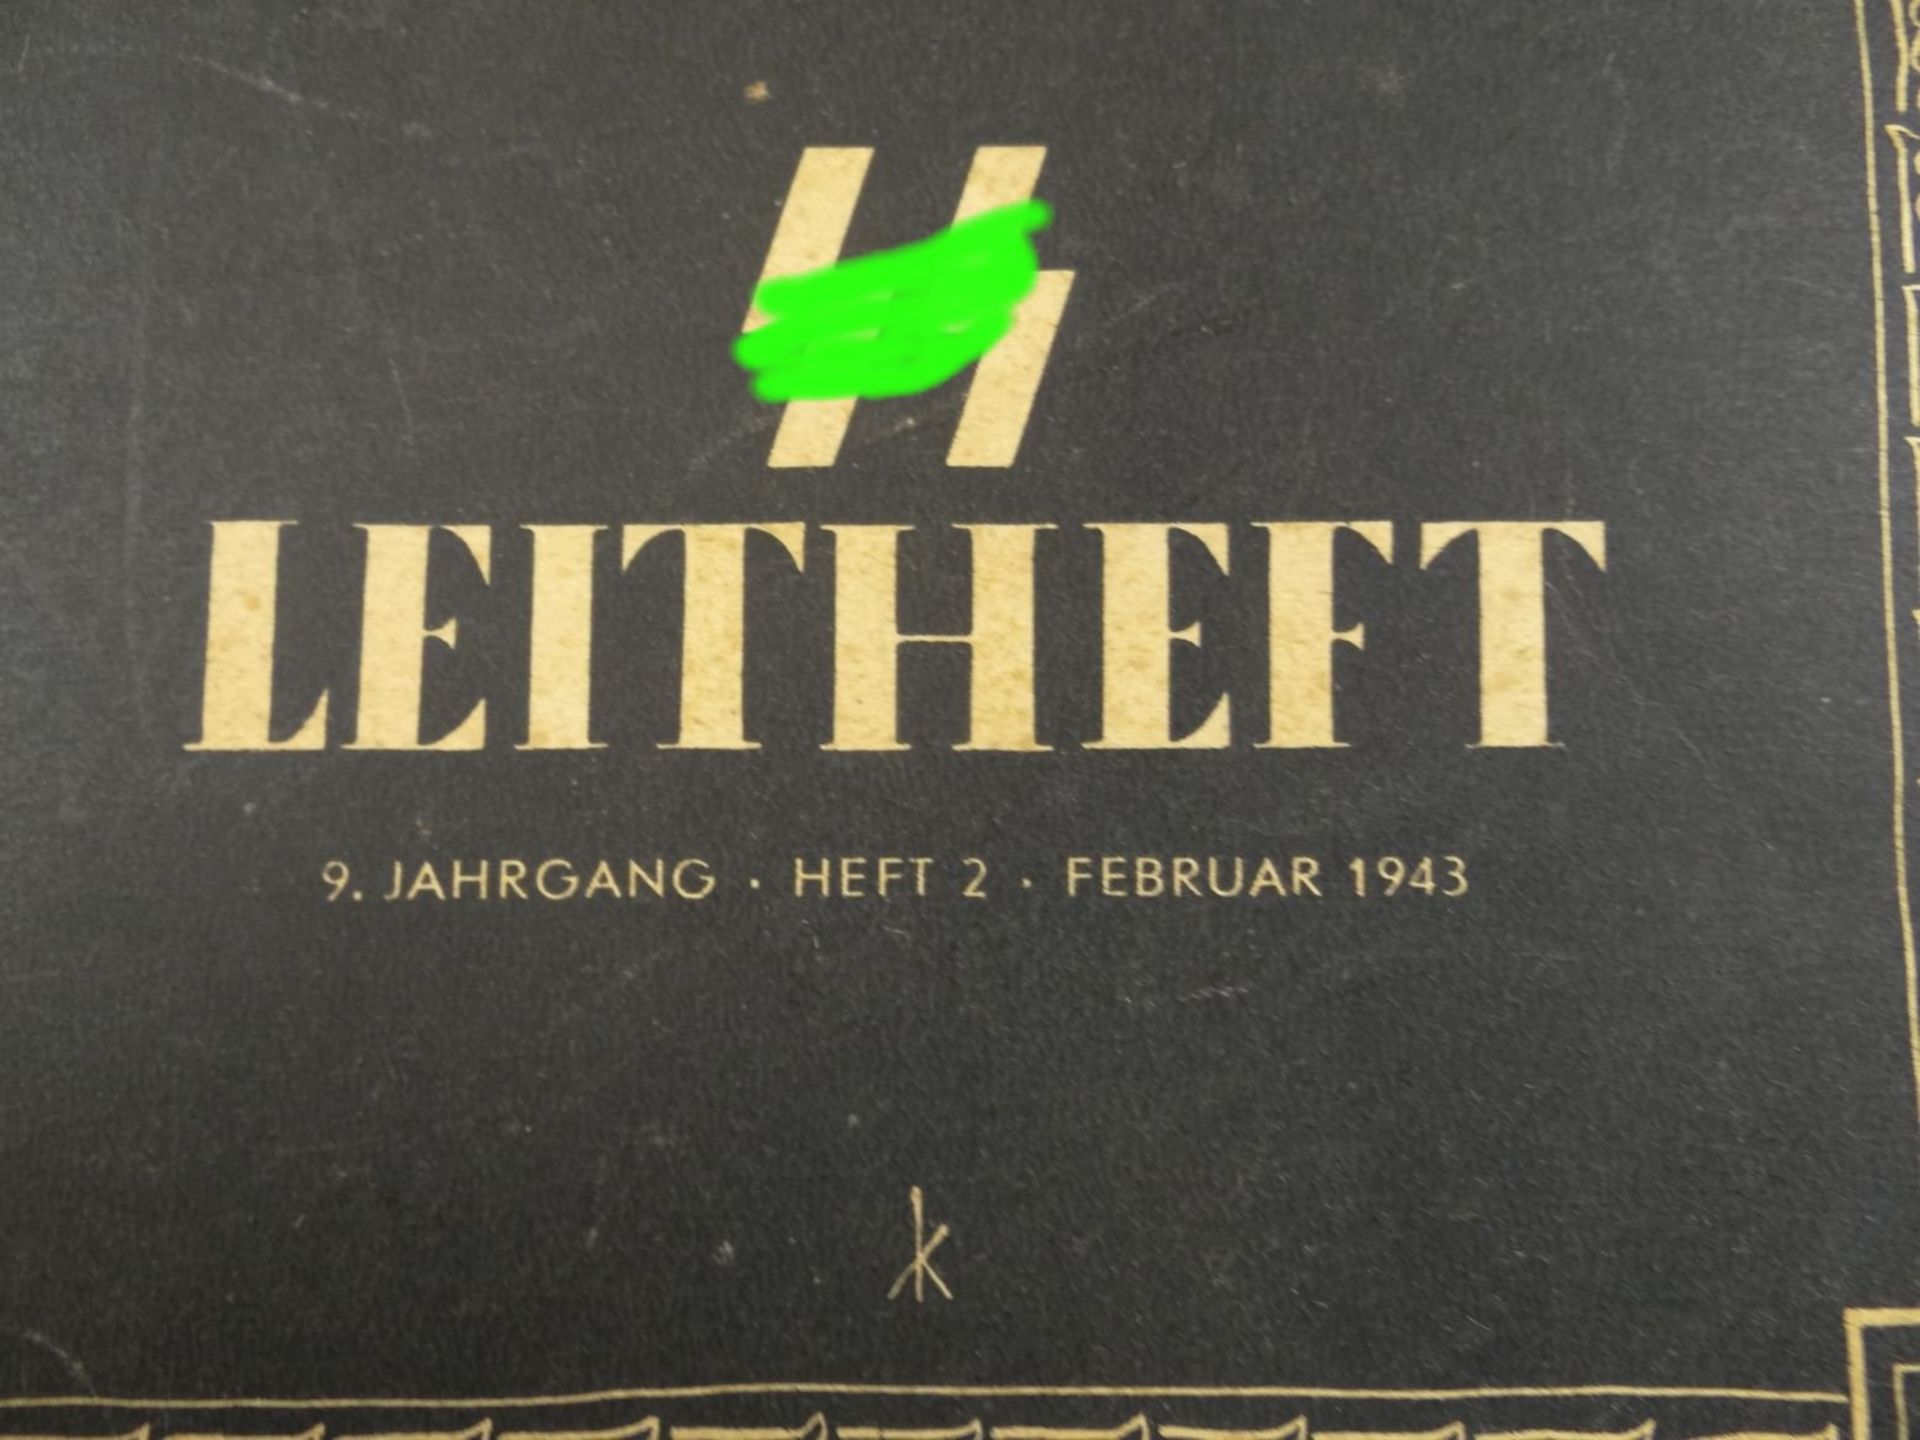 SS-Leitheft, Februar 1943 - Image 4 of 6